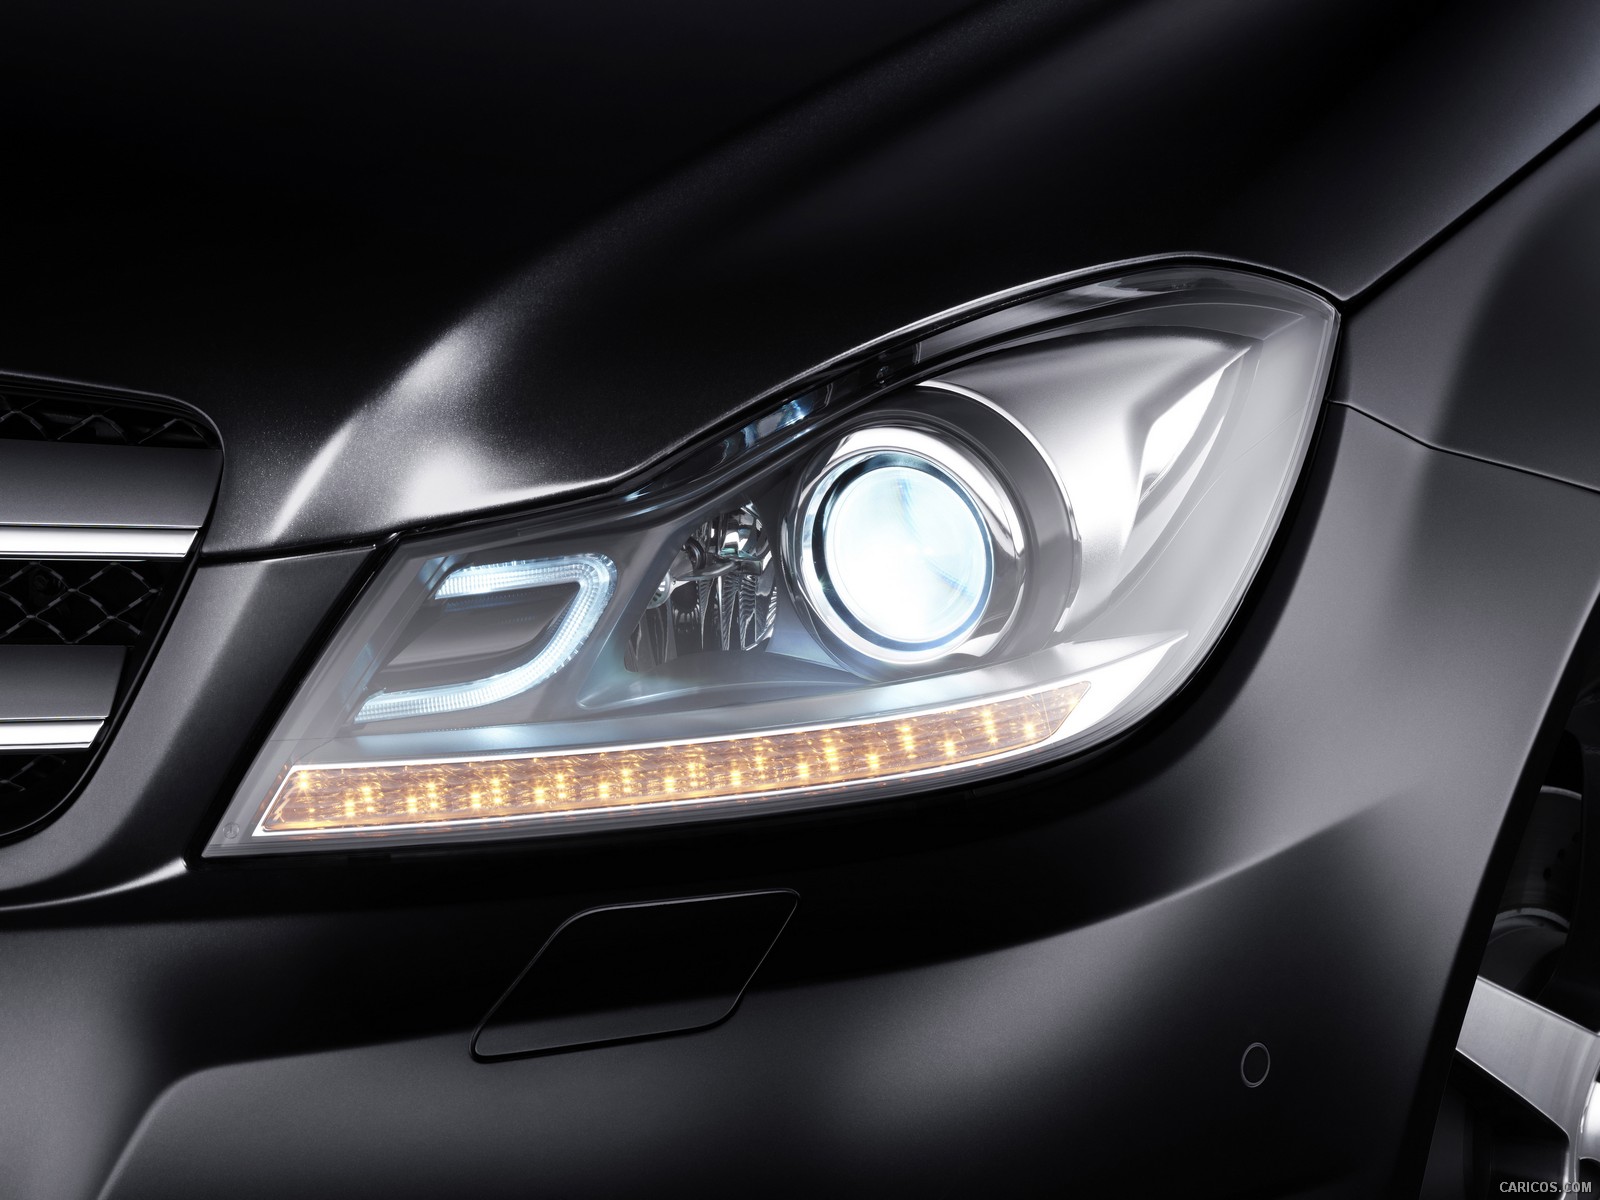 Mercedes-Benz C-Class Coupe (2012)  - Headlight, #26 of 79